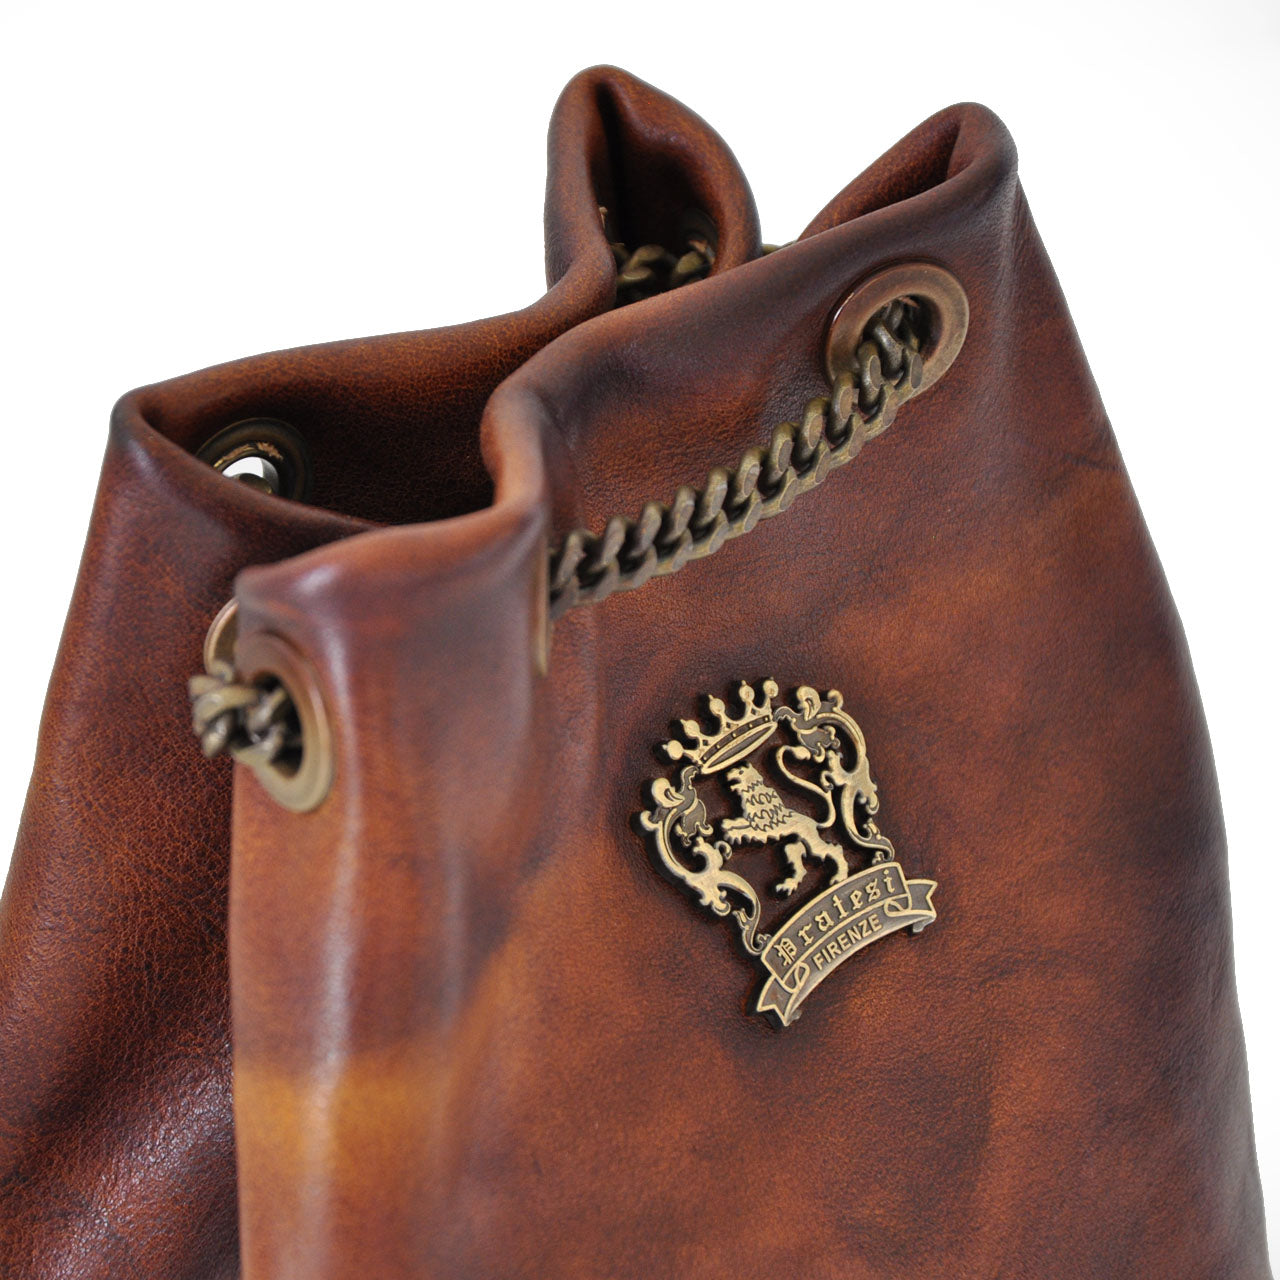 Pratesi Pienza Bag in genuine Italian leather - Pienza Bag in genuine Italian leather